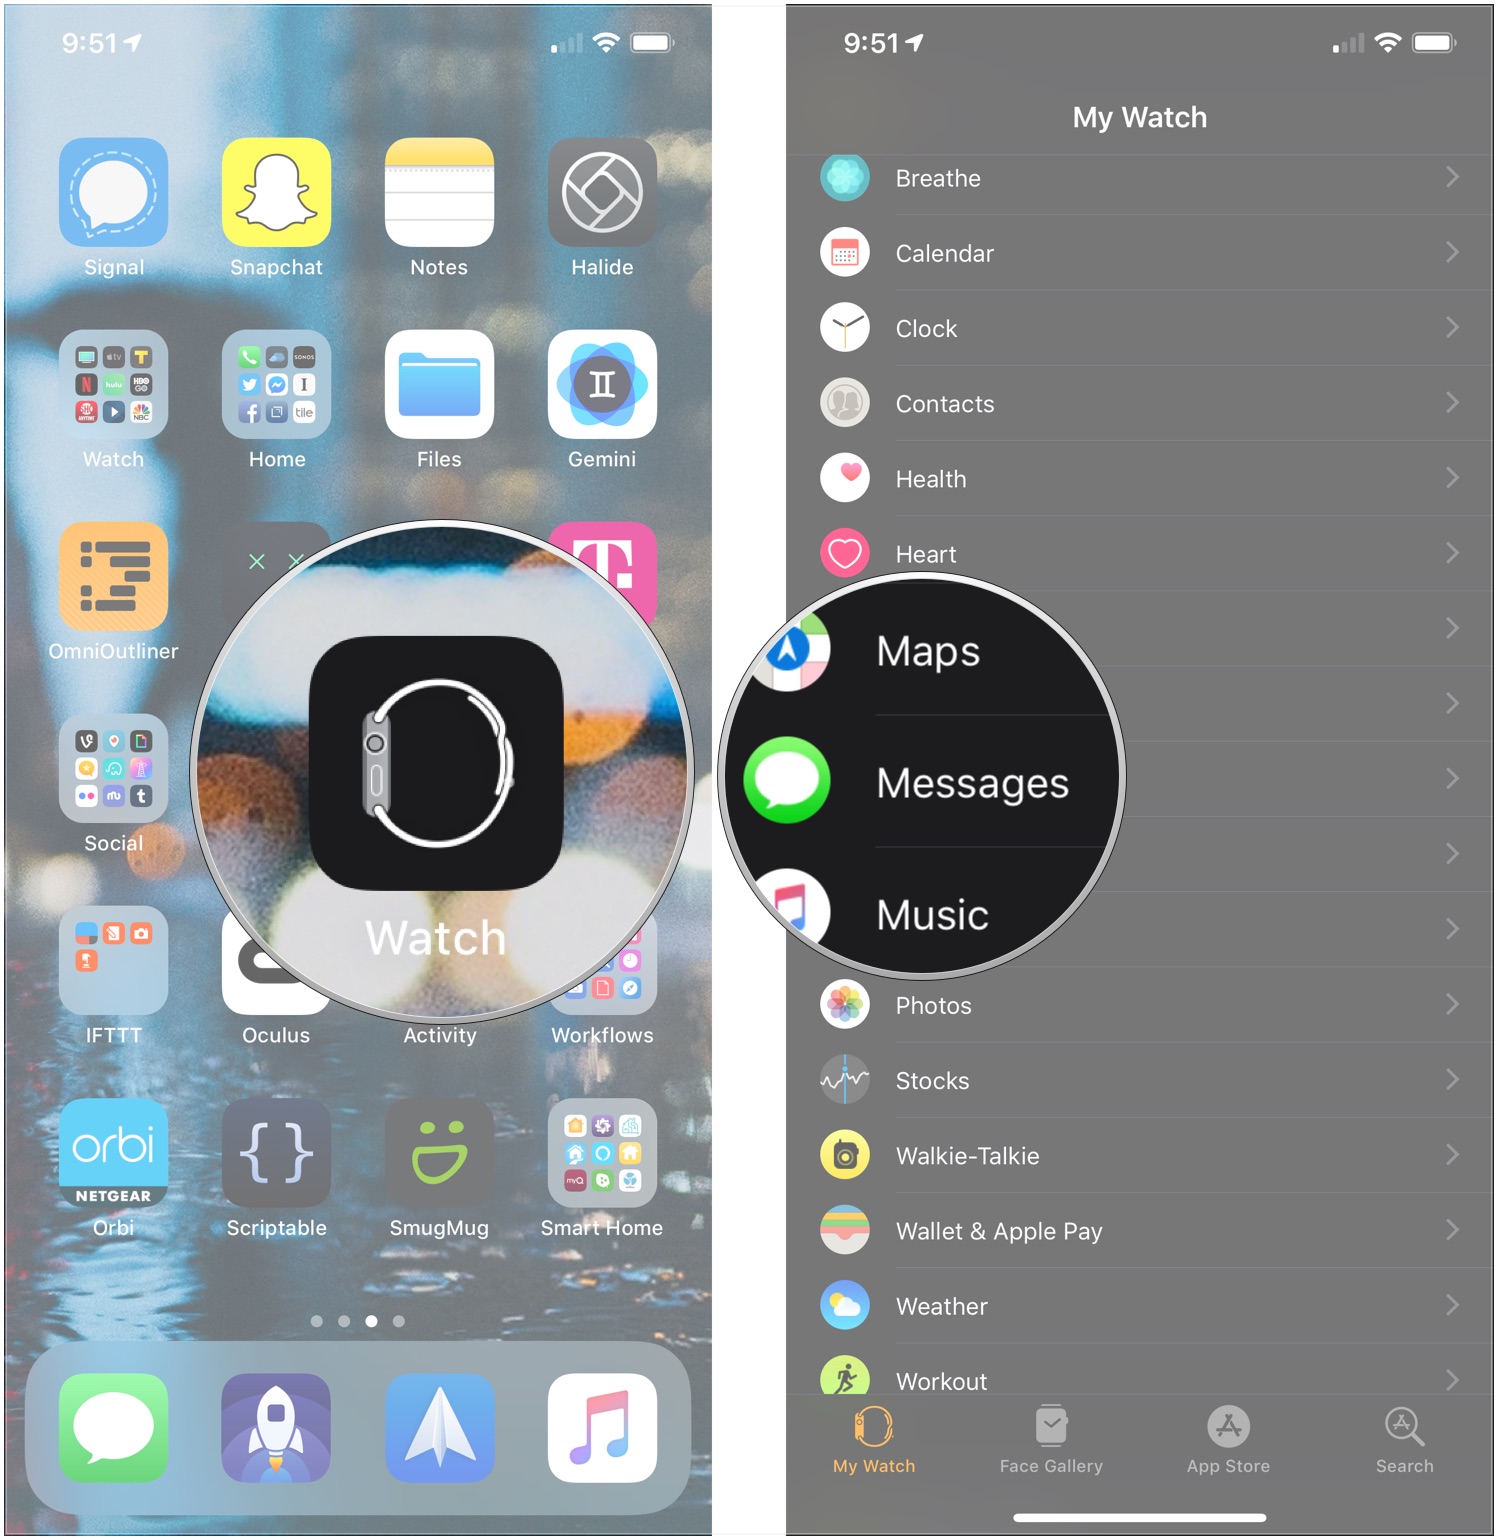 Open Apple Watch app, tap Messages